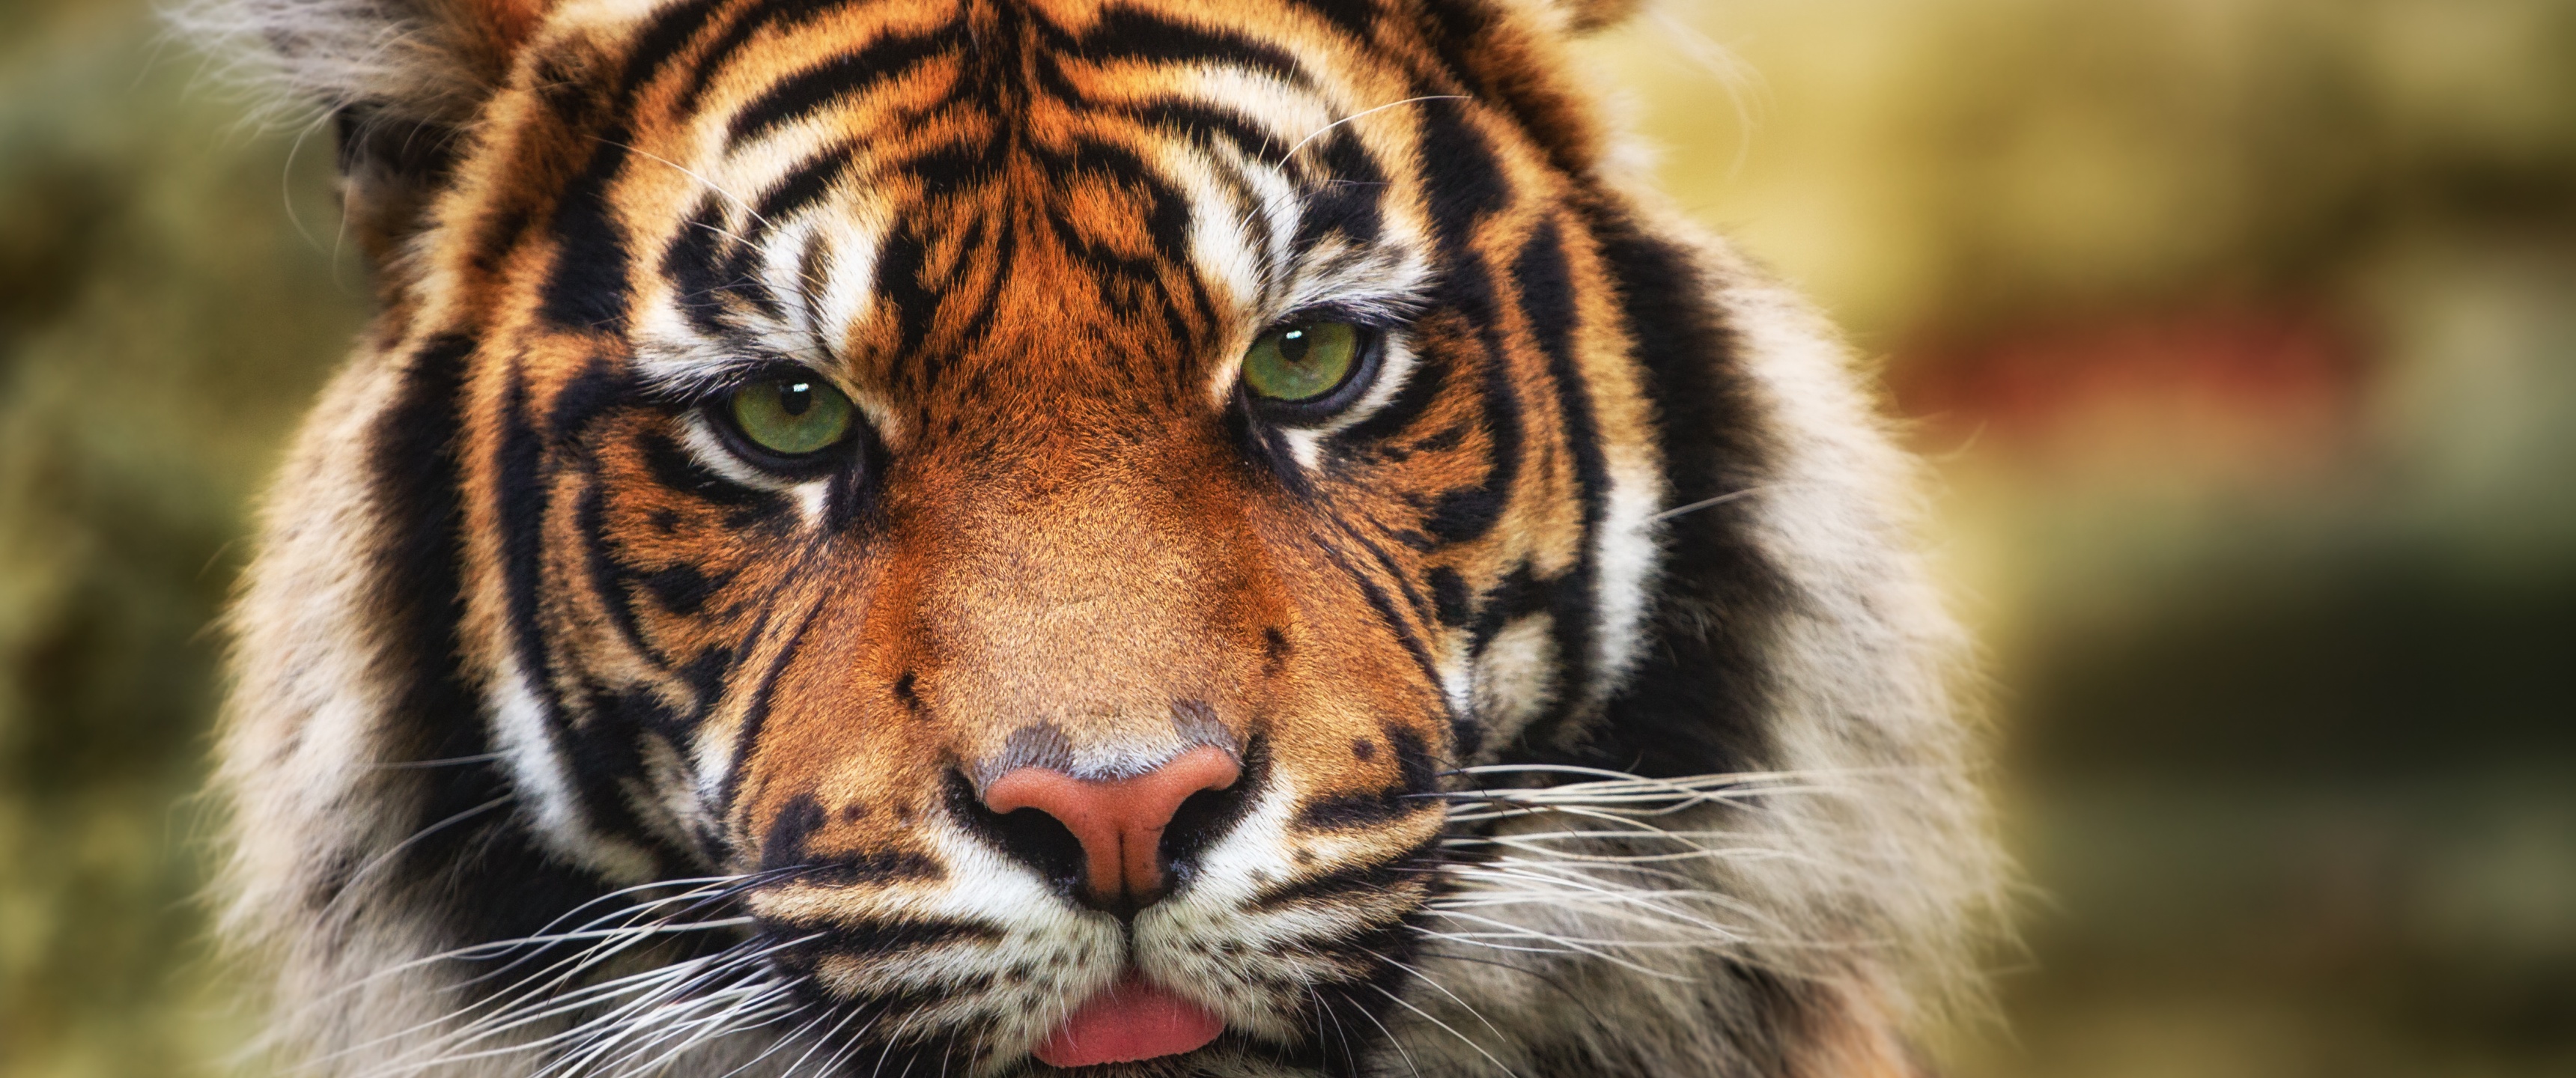 Tiger Wallpaper 4K, Big cat, Wildlife, Animals, #2457